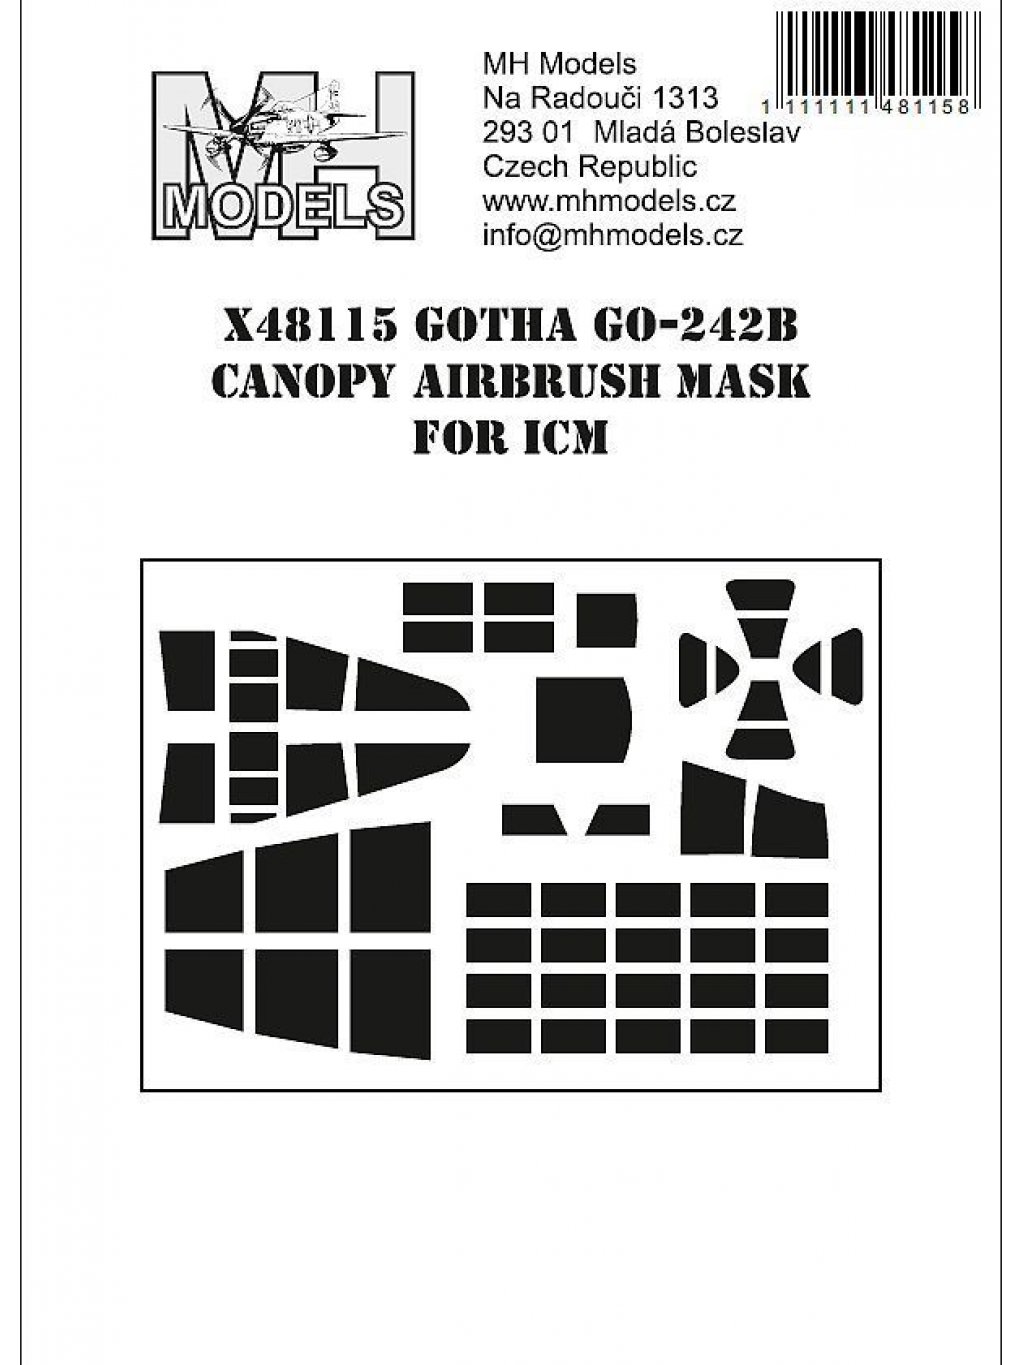 Gotha Go-242B canopy airbrush mask for ICM